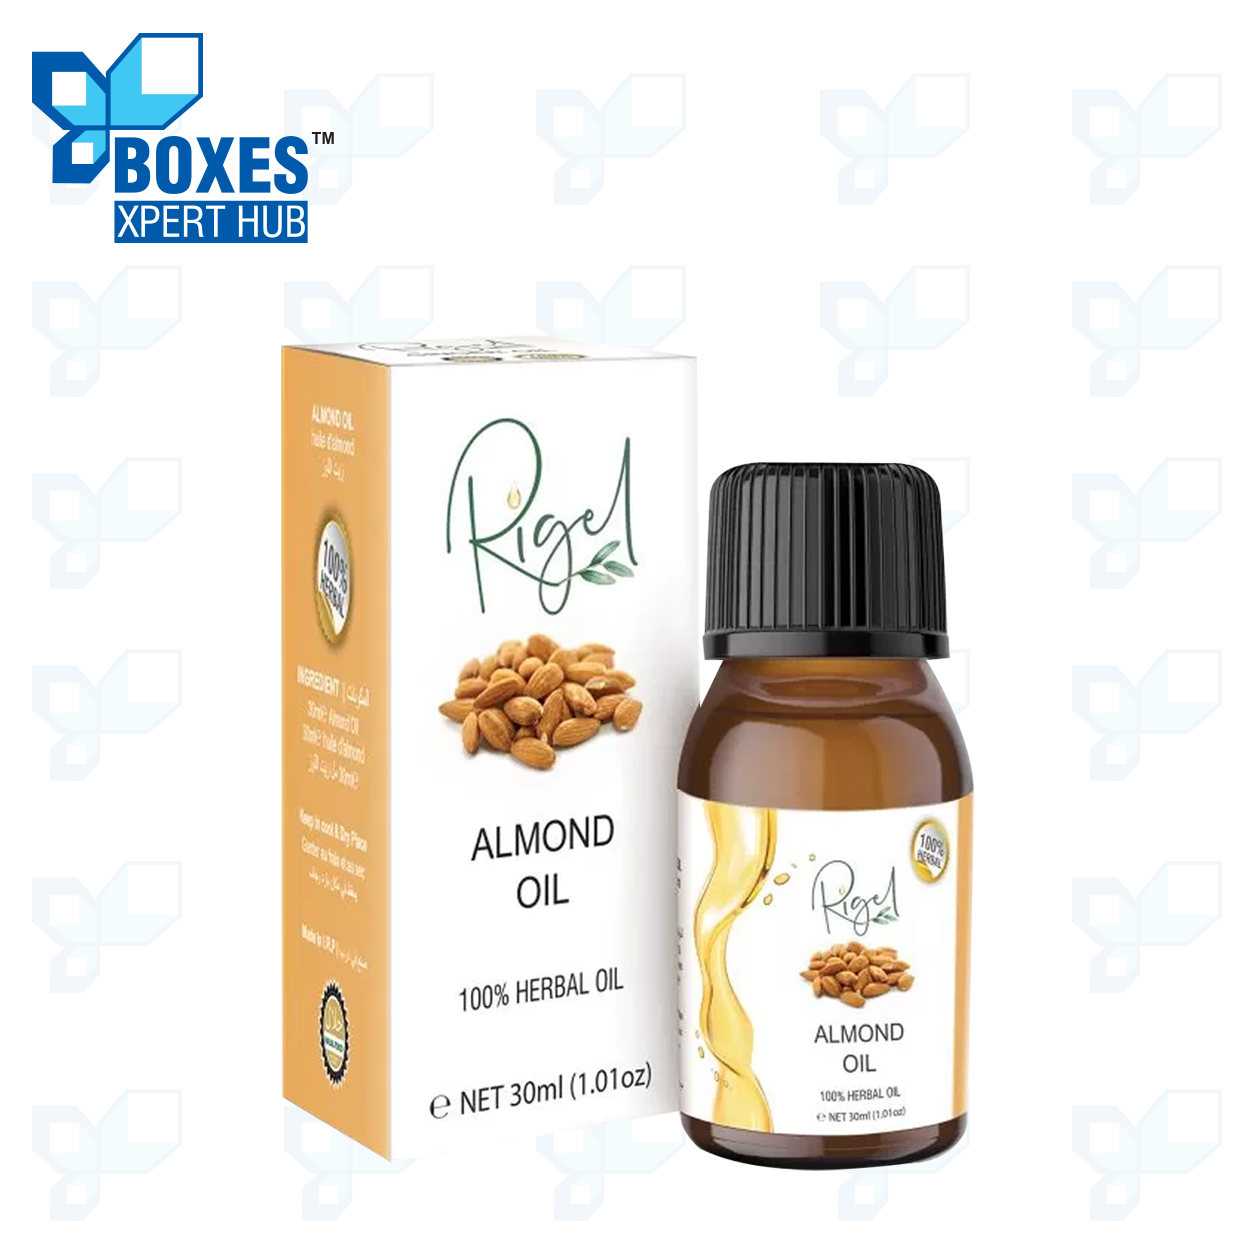 Almond Oil Boxes